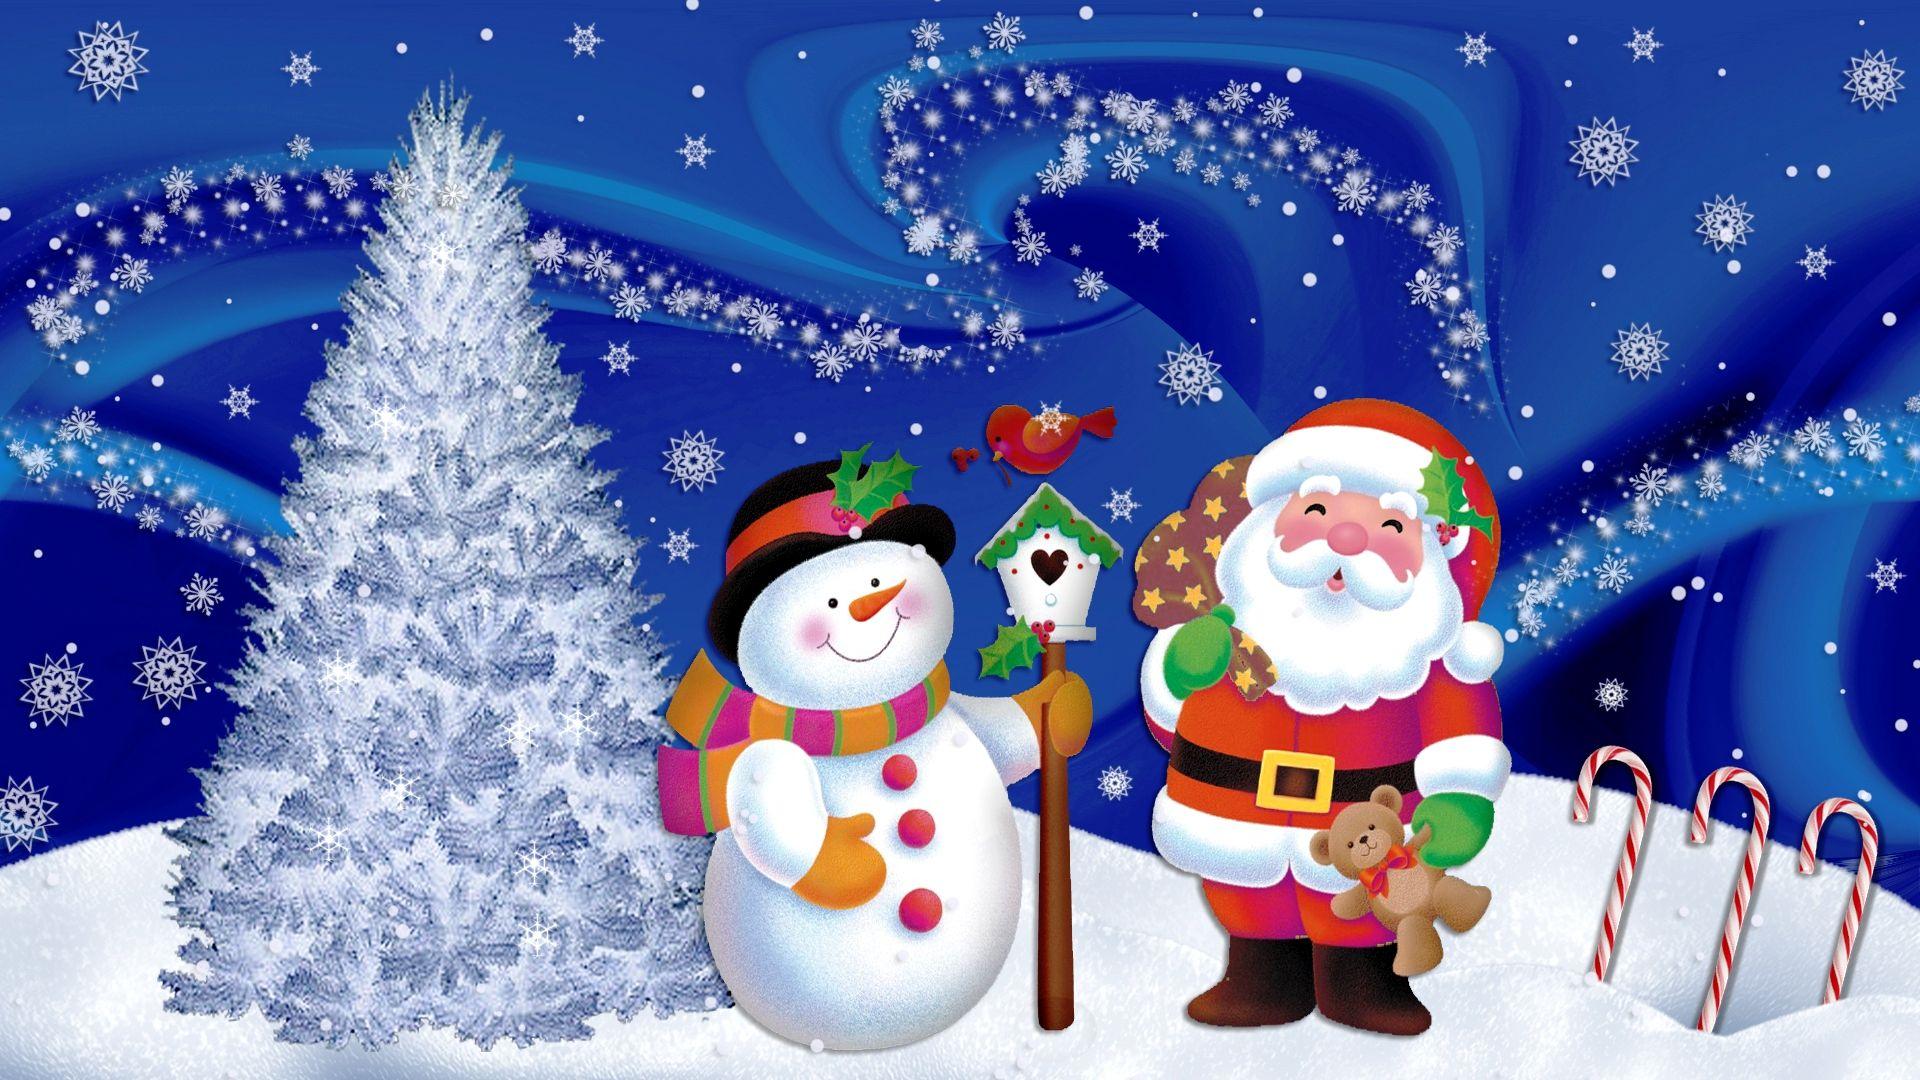 Animated Christmas Wallpaper Free Download Snowman And Santa